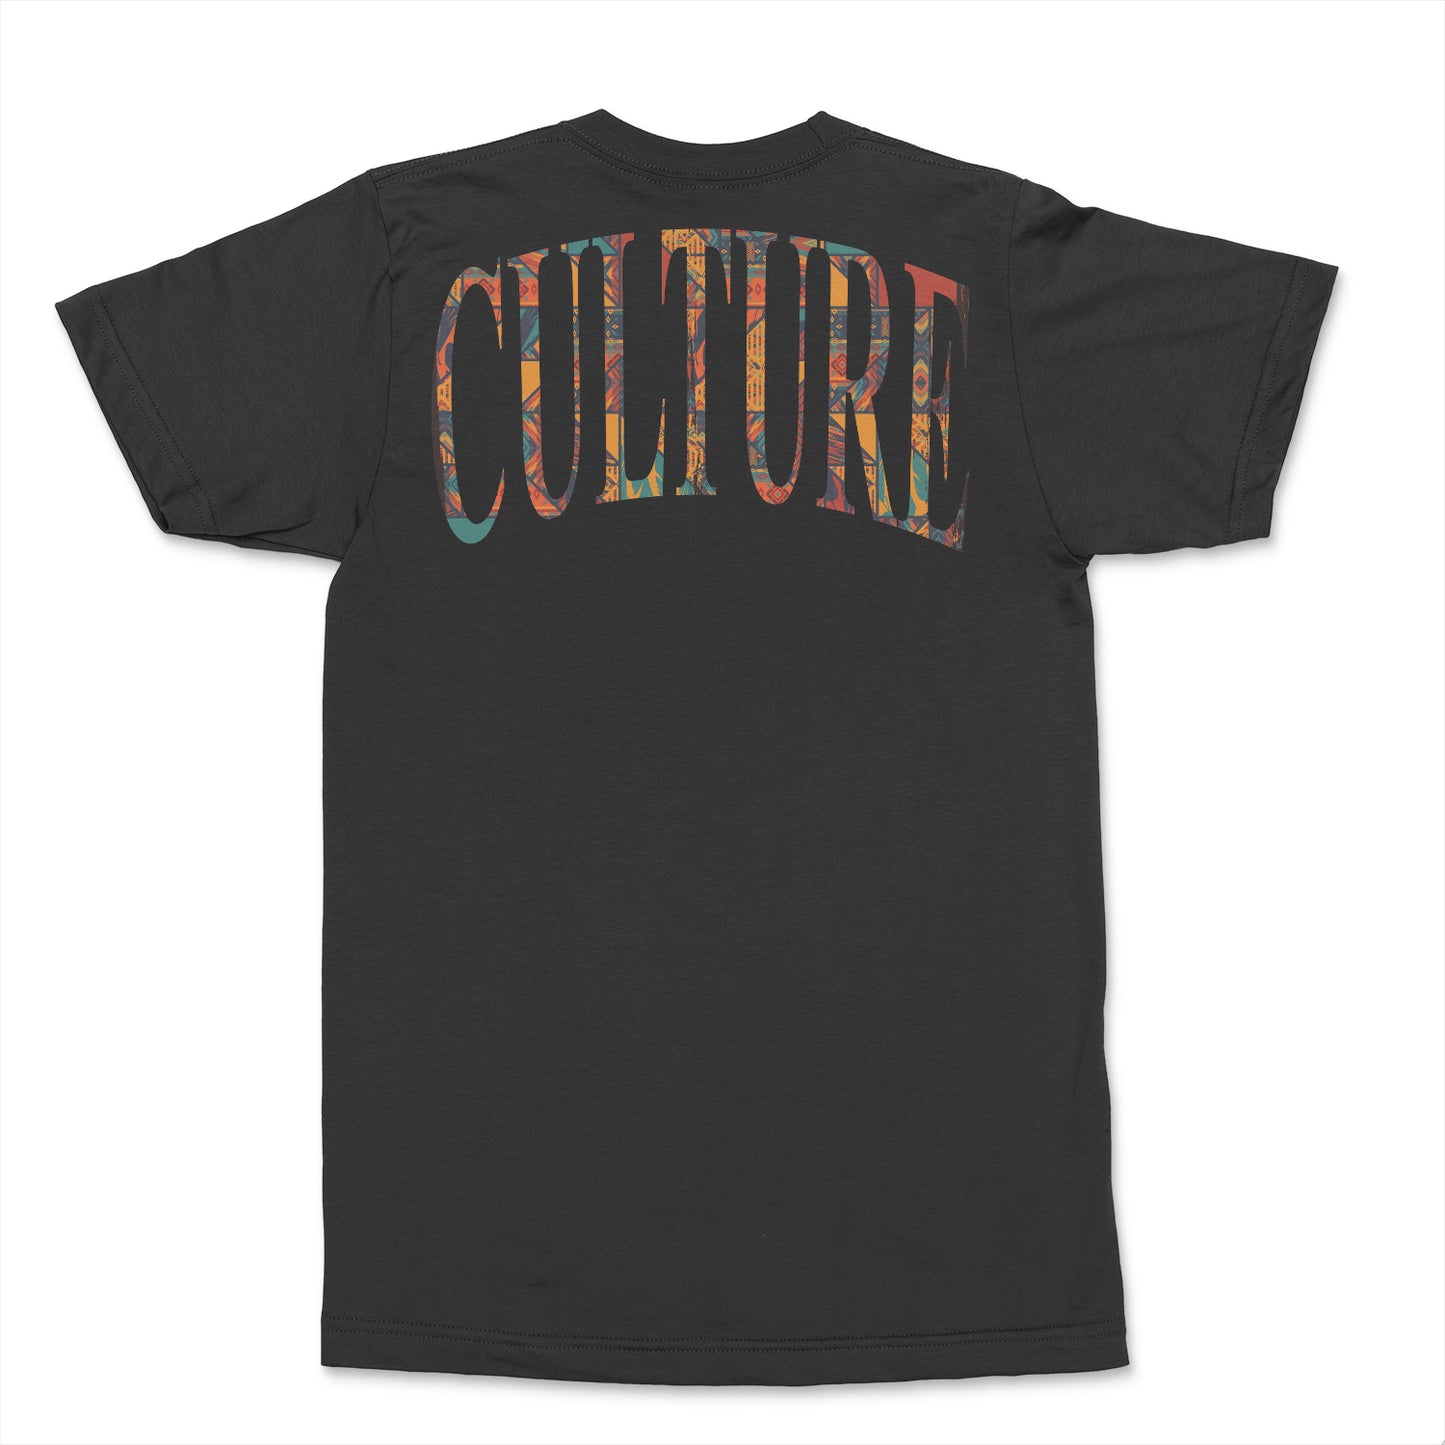 Limited Edition Culture T-shirt Black (Unisex Fit)